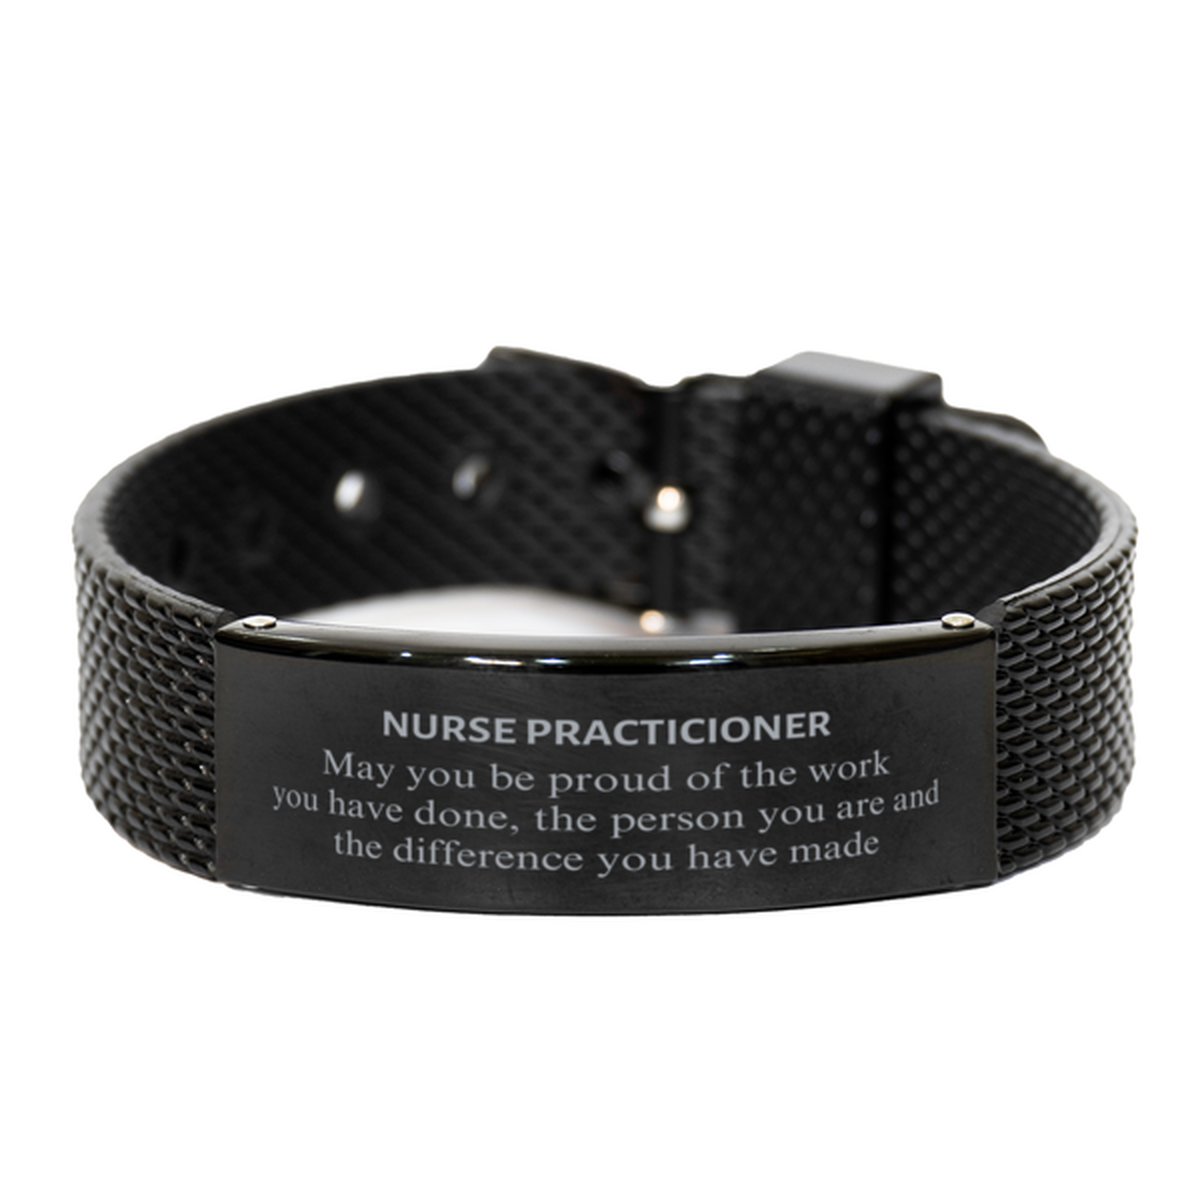 Nurse Practicioner May you be proud of the work you have done, Retirement Nurse Practicioner Black Shark Mesh Bracelet for Colleague Appreciation Gifts Amazing for Nurse Practicioner